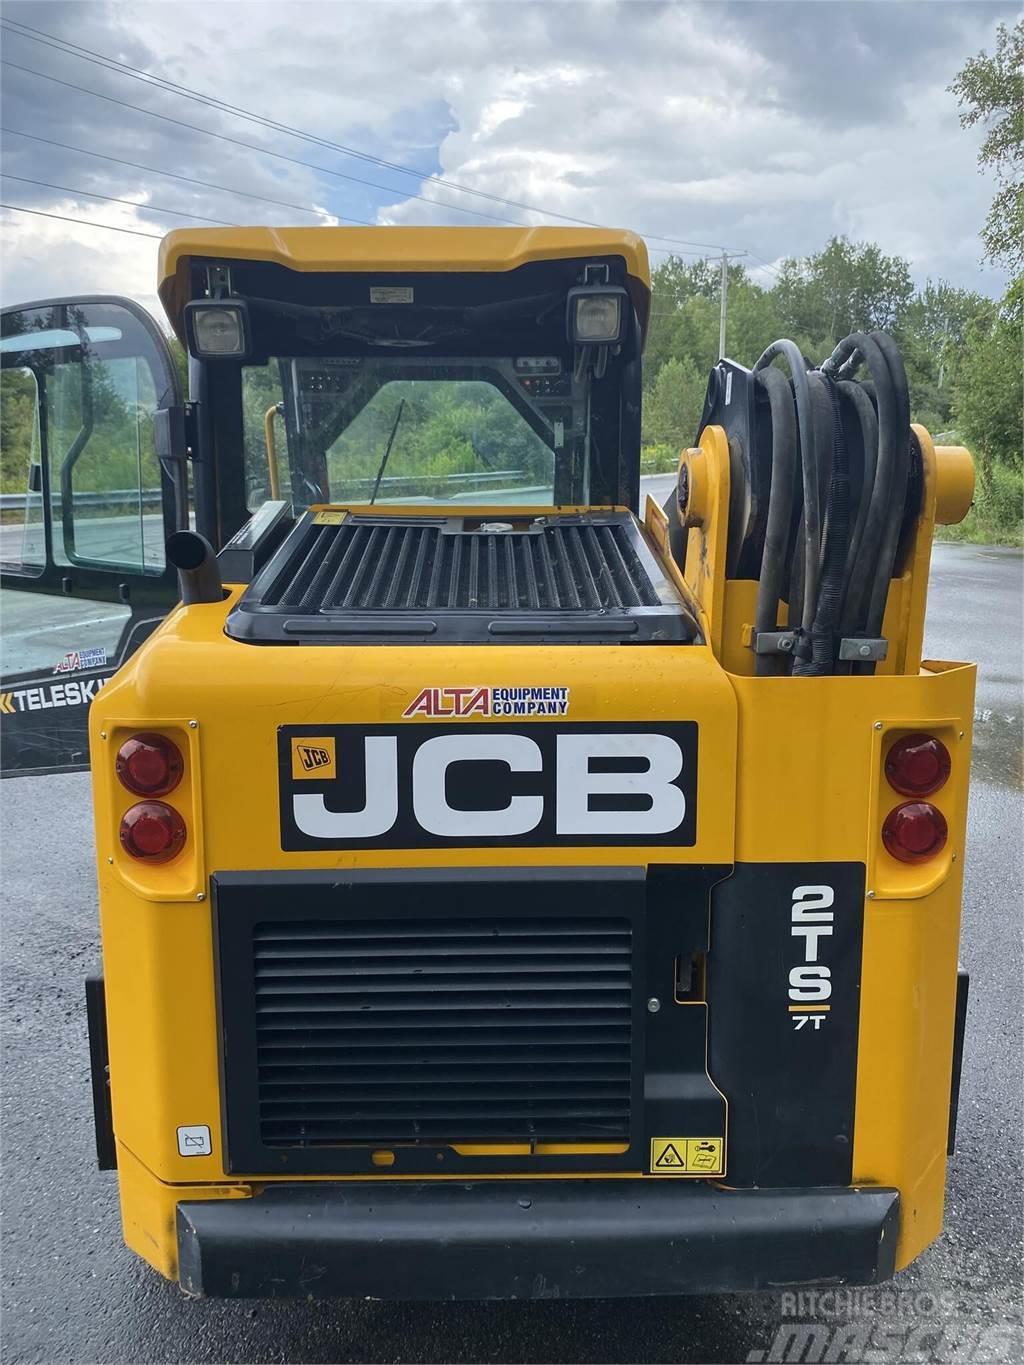 JCB 2TS-7T Skid steer loaders